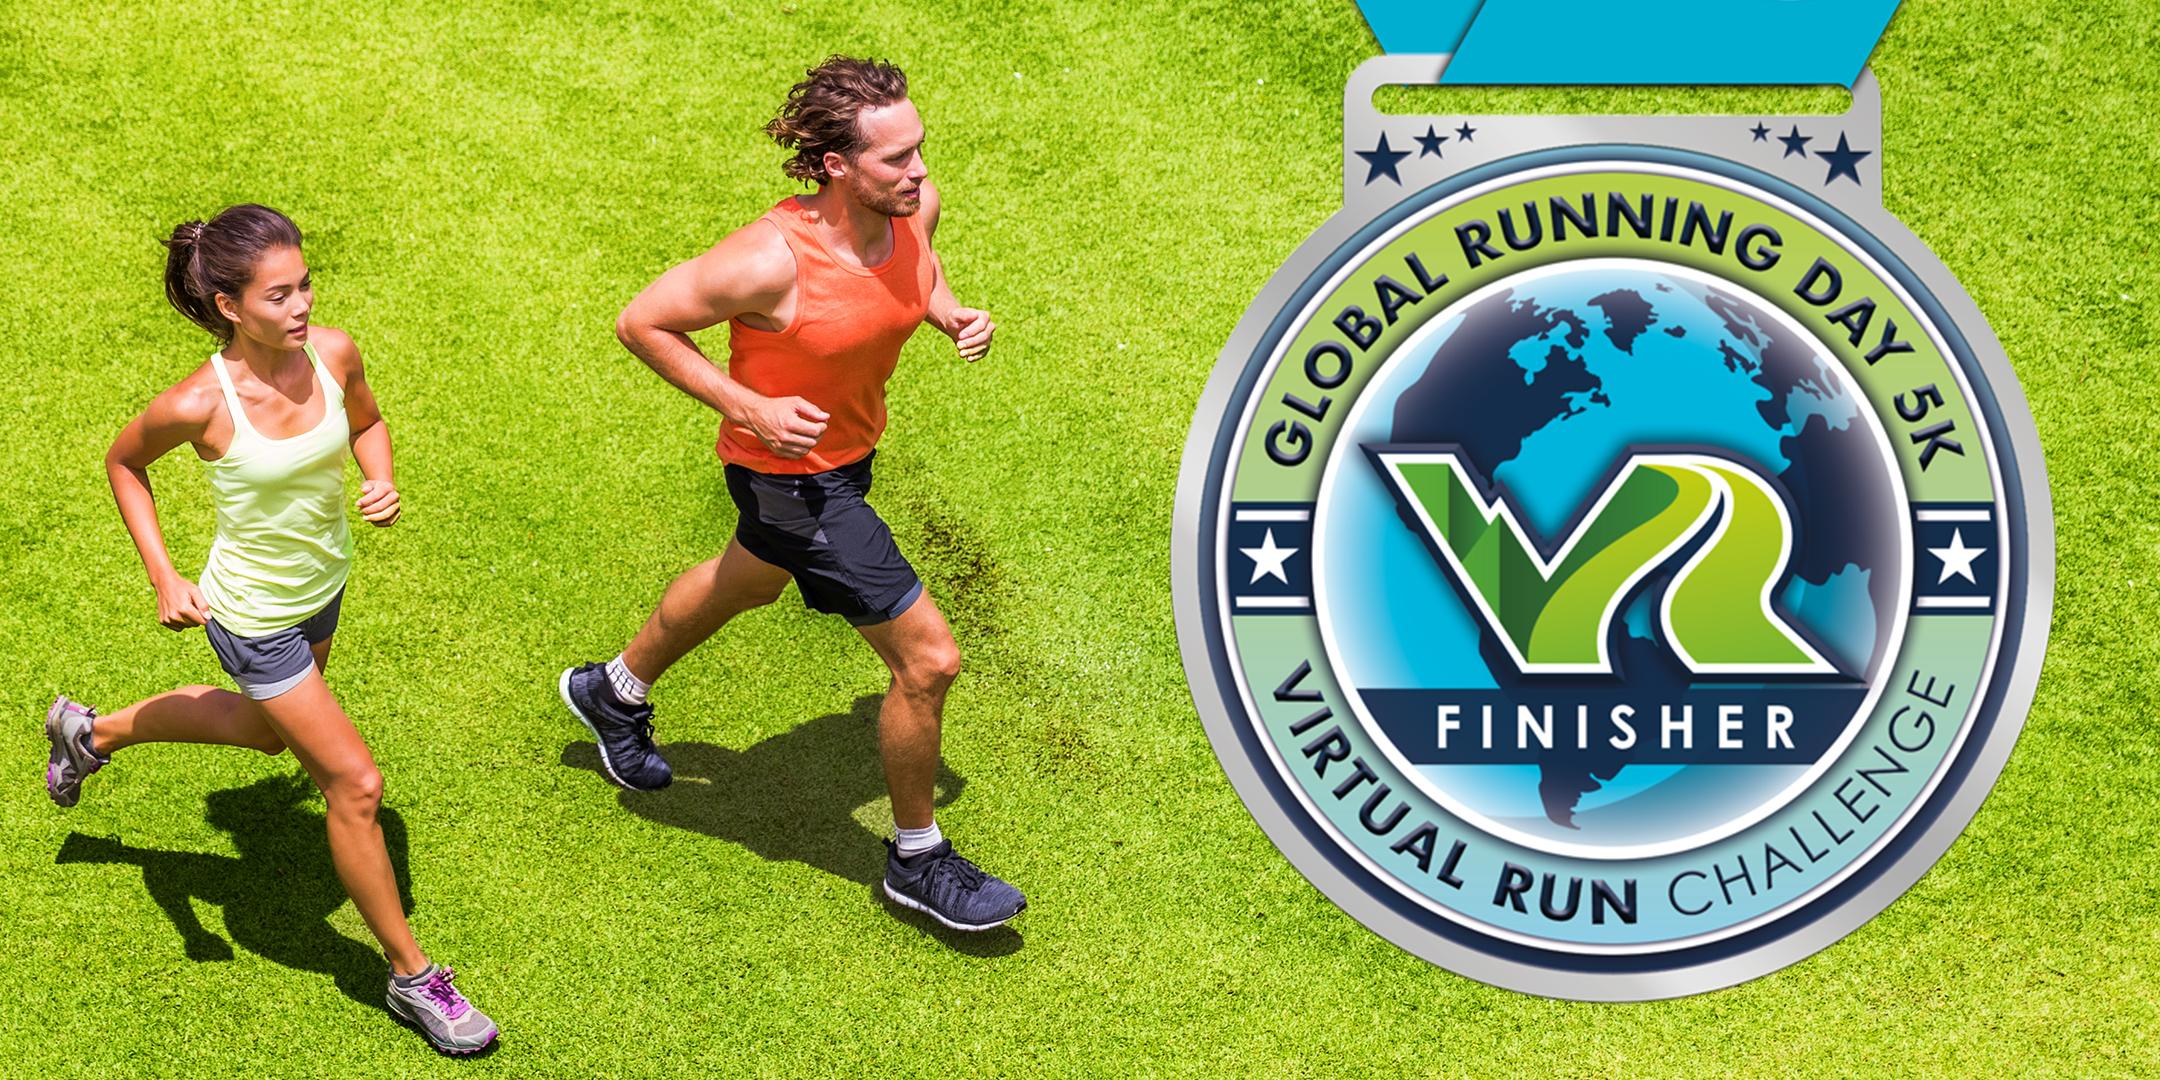 2020 Global Running Day Free Virtual 5k - Provo